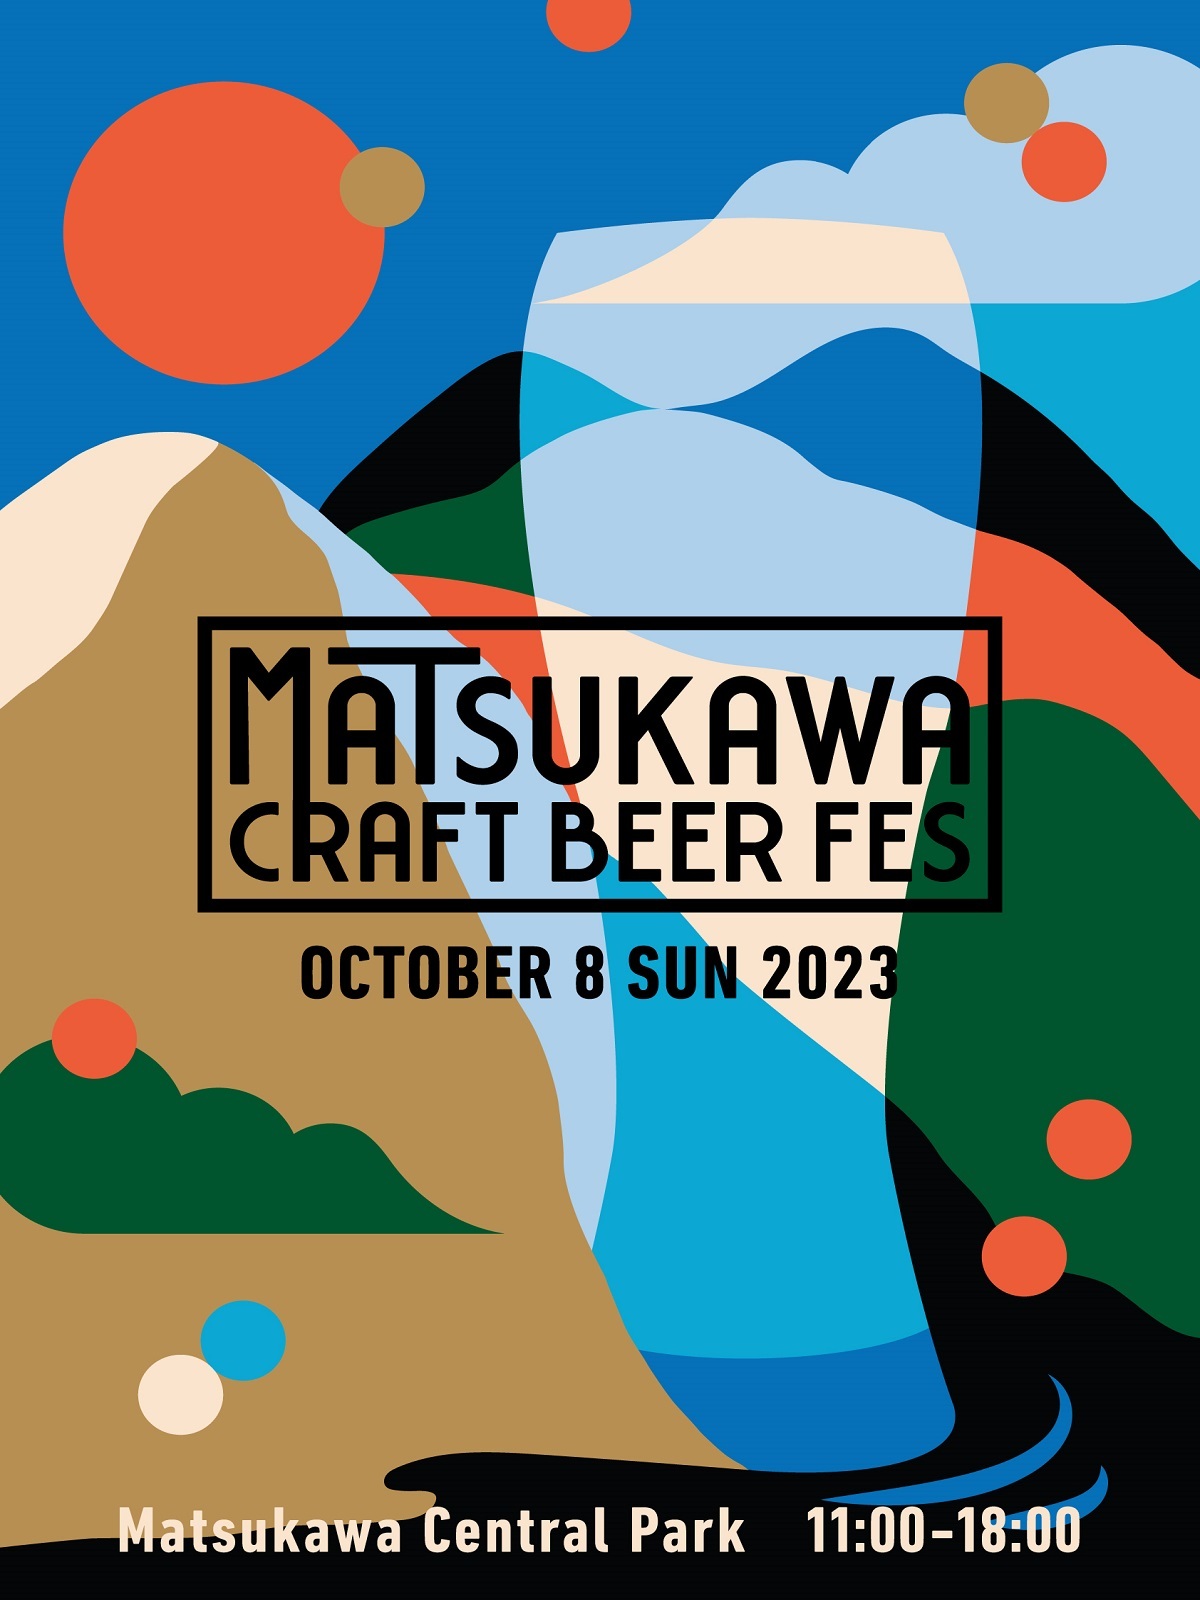 Matsukawa Craft Beer Festival